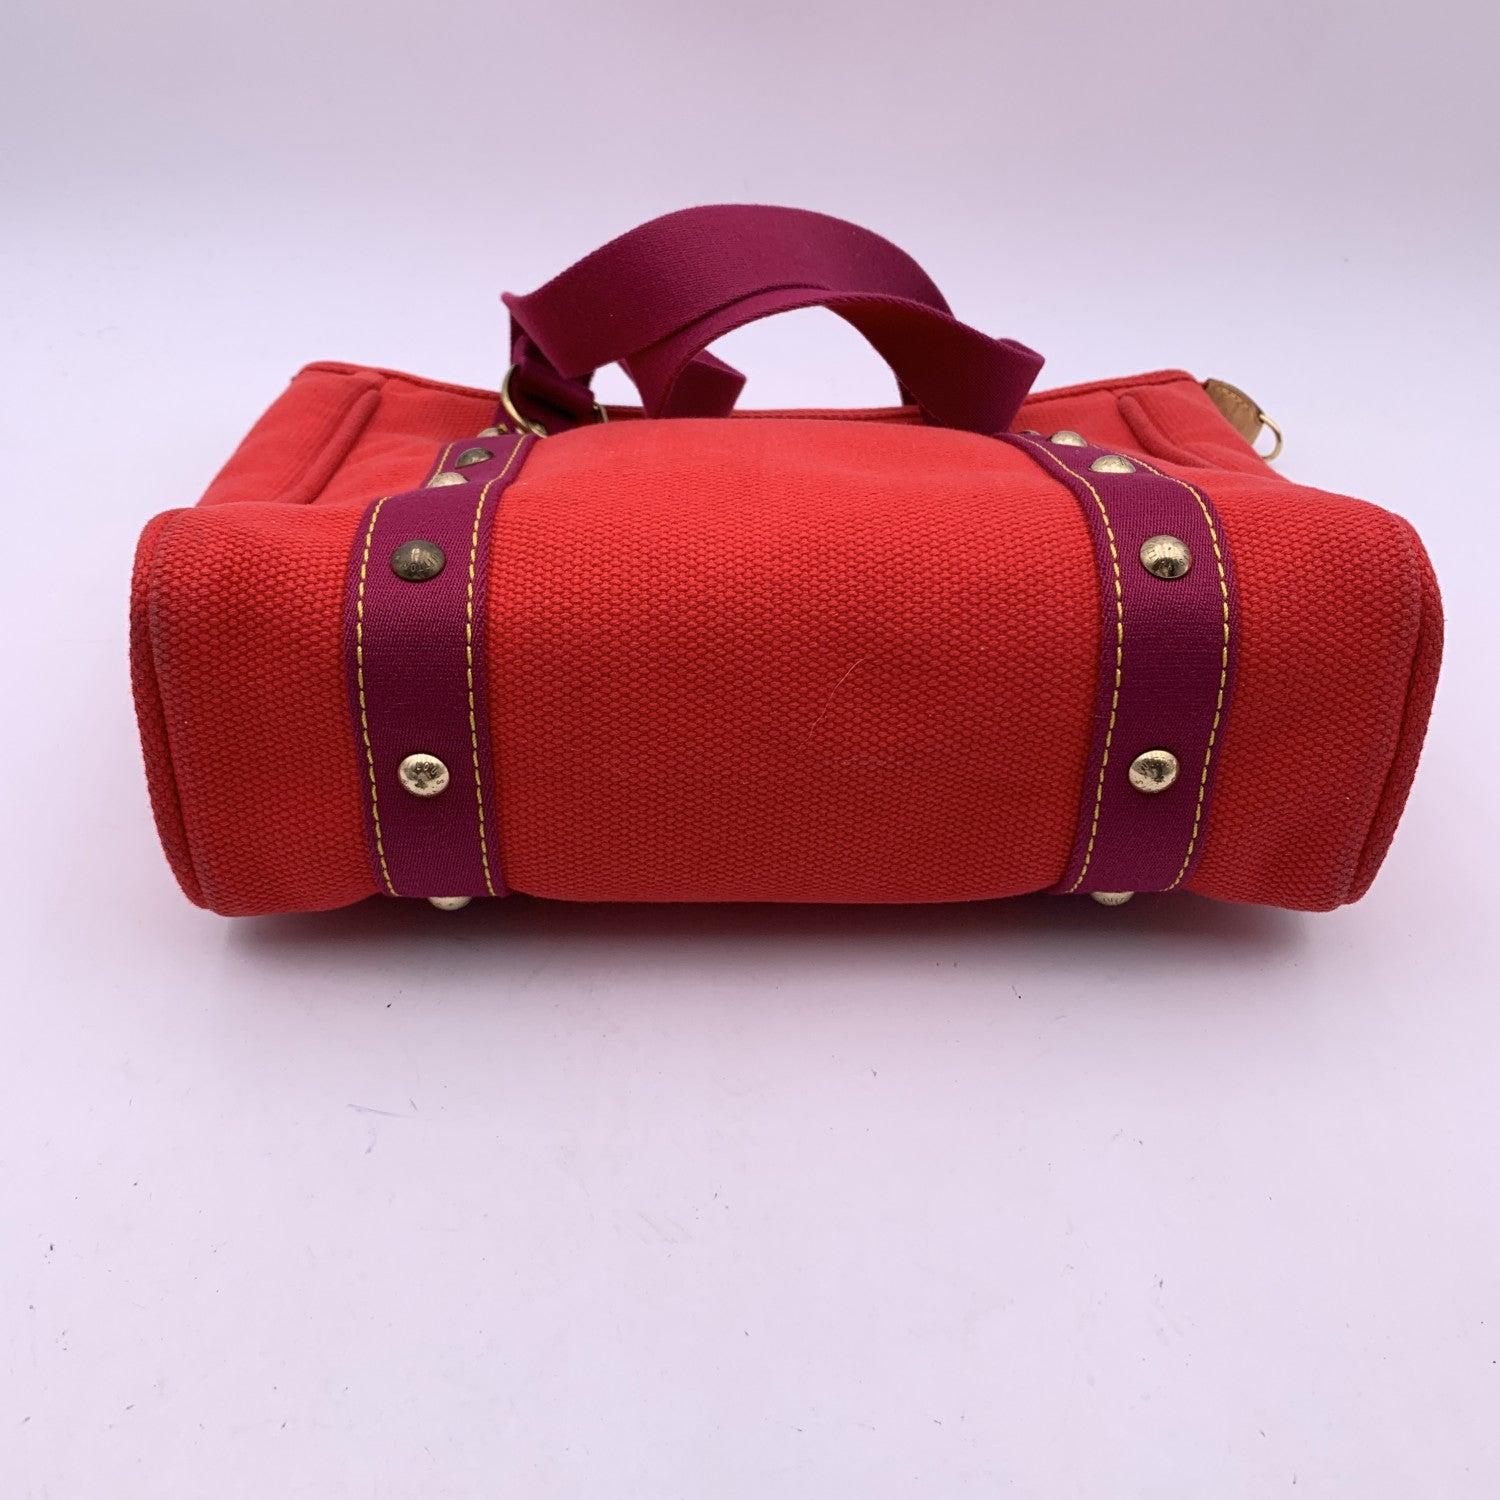 Louis Vuitton Red Cabas MM Antigua Tote Bag Handbag M40034 3